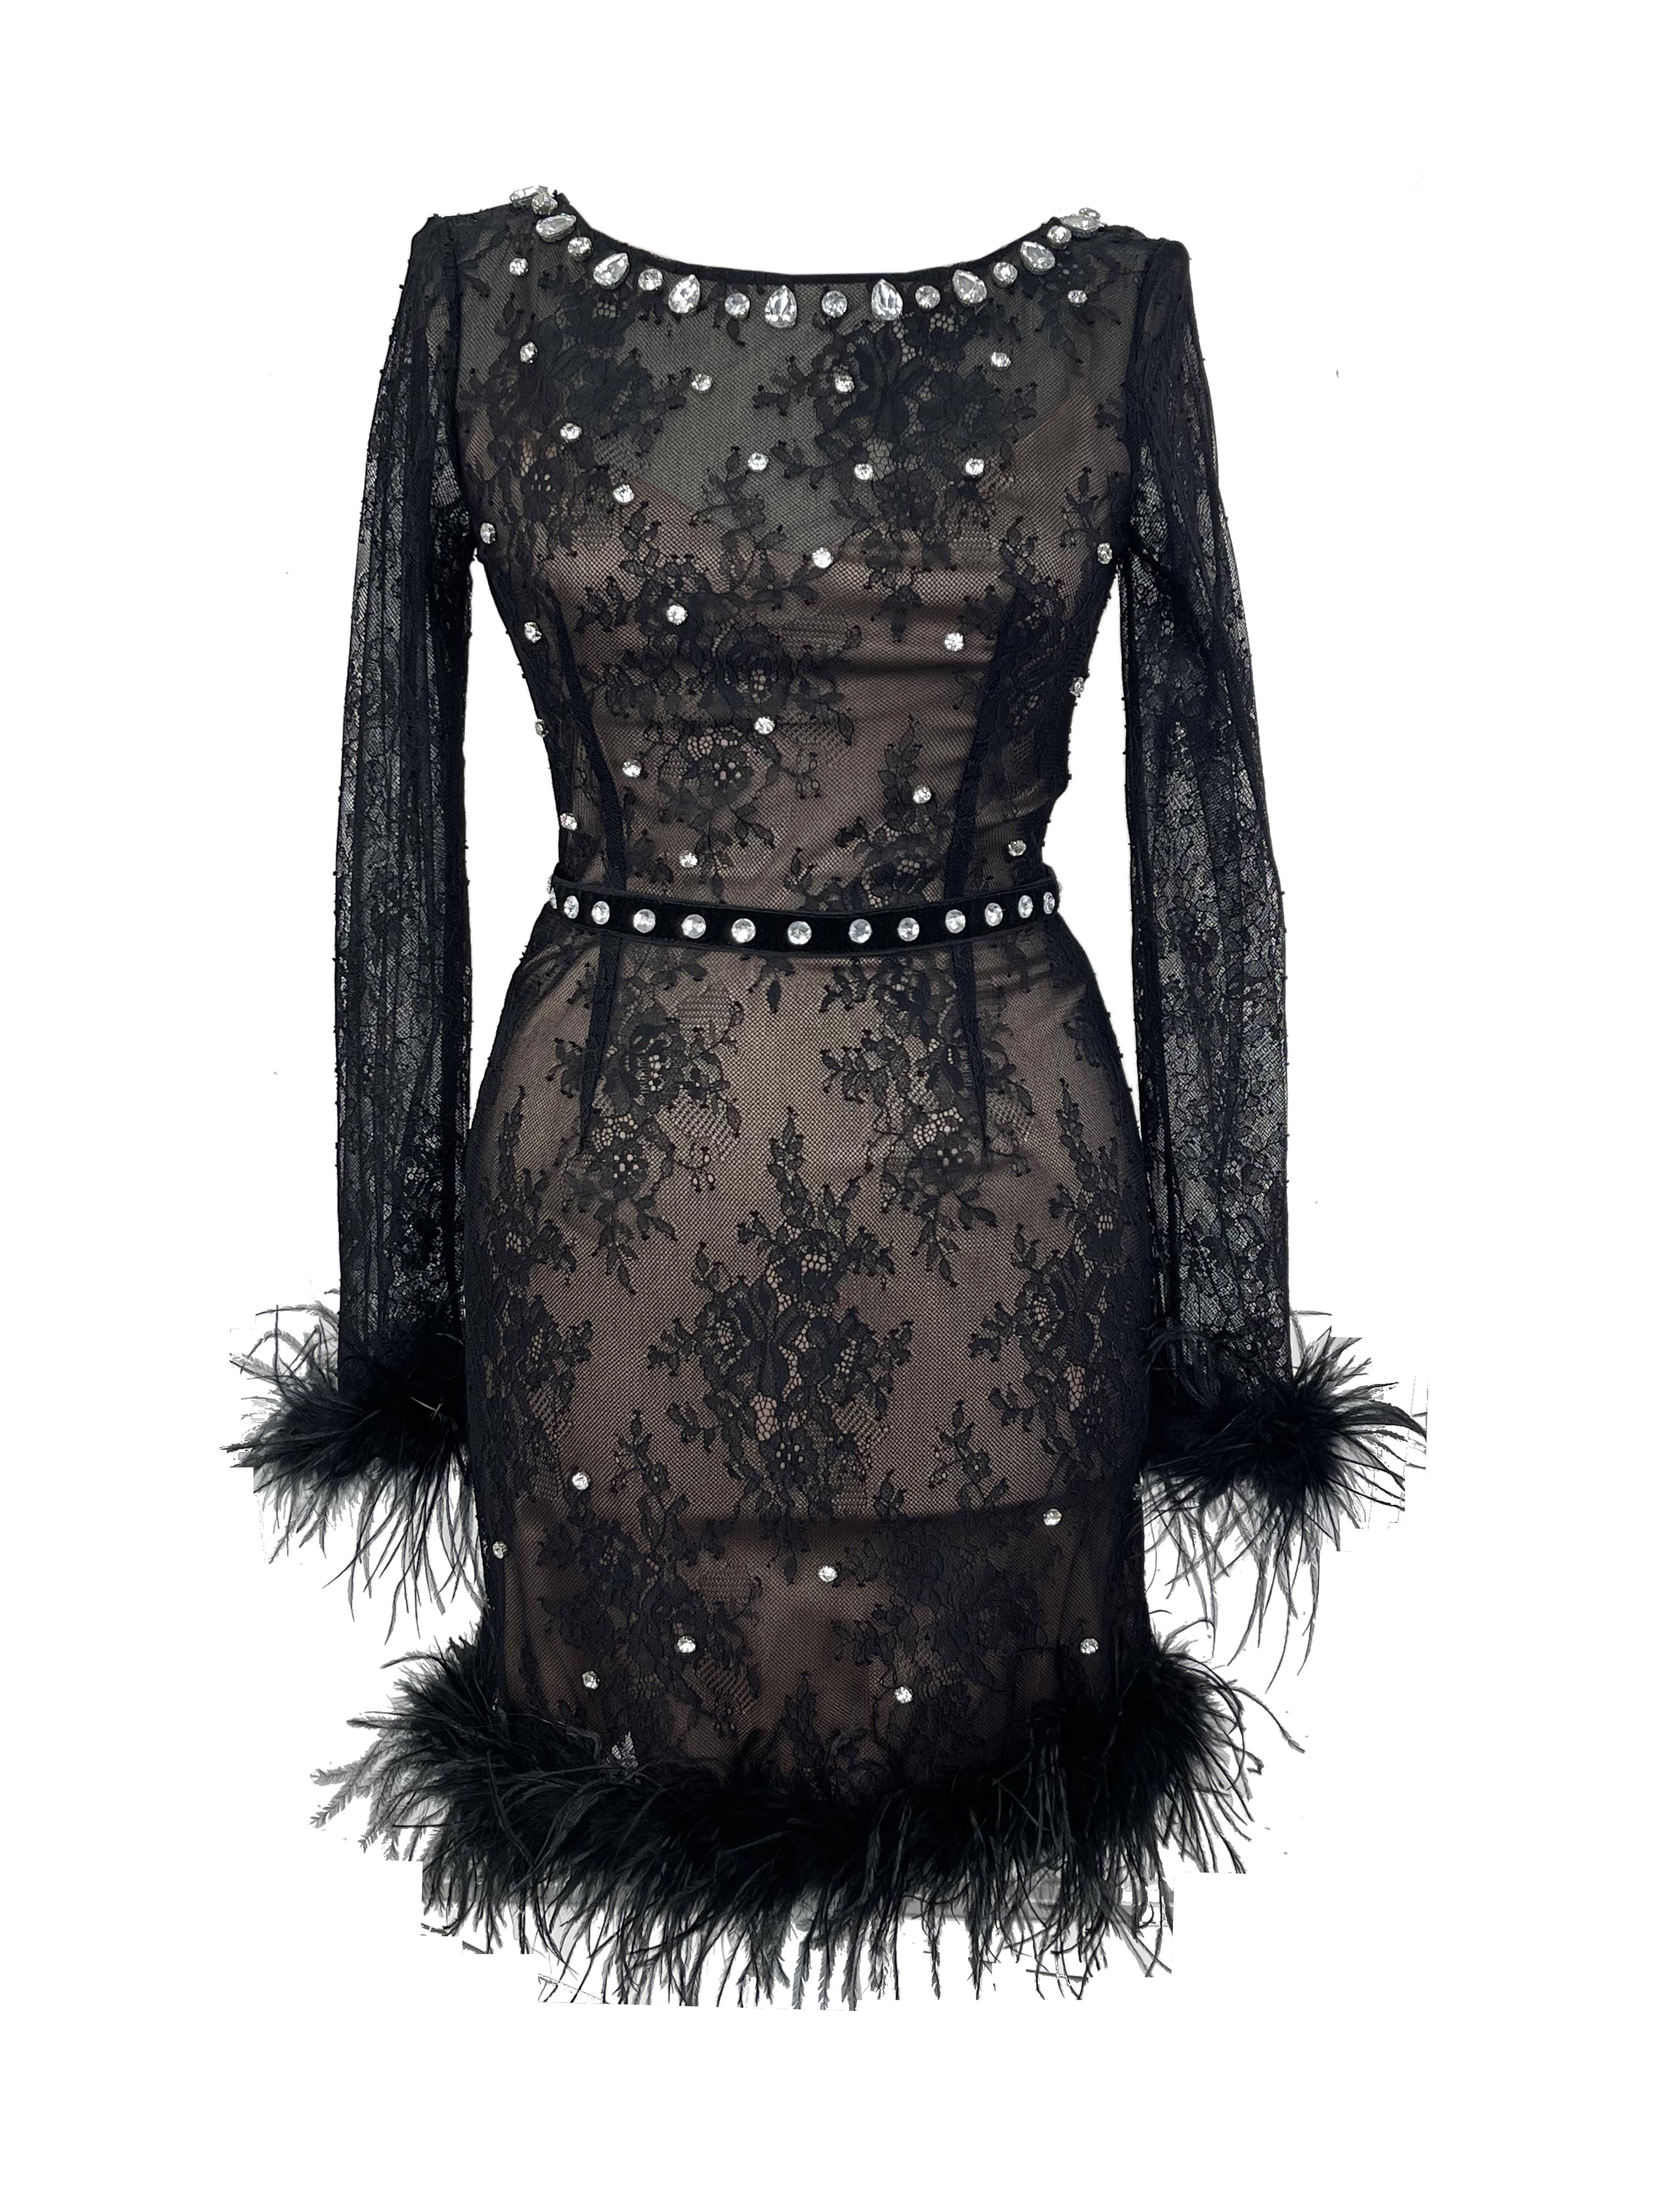 R24120 - BLACK 01 - CASANDRA black lace mini dress with feathers and crystals - ambar studio